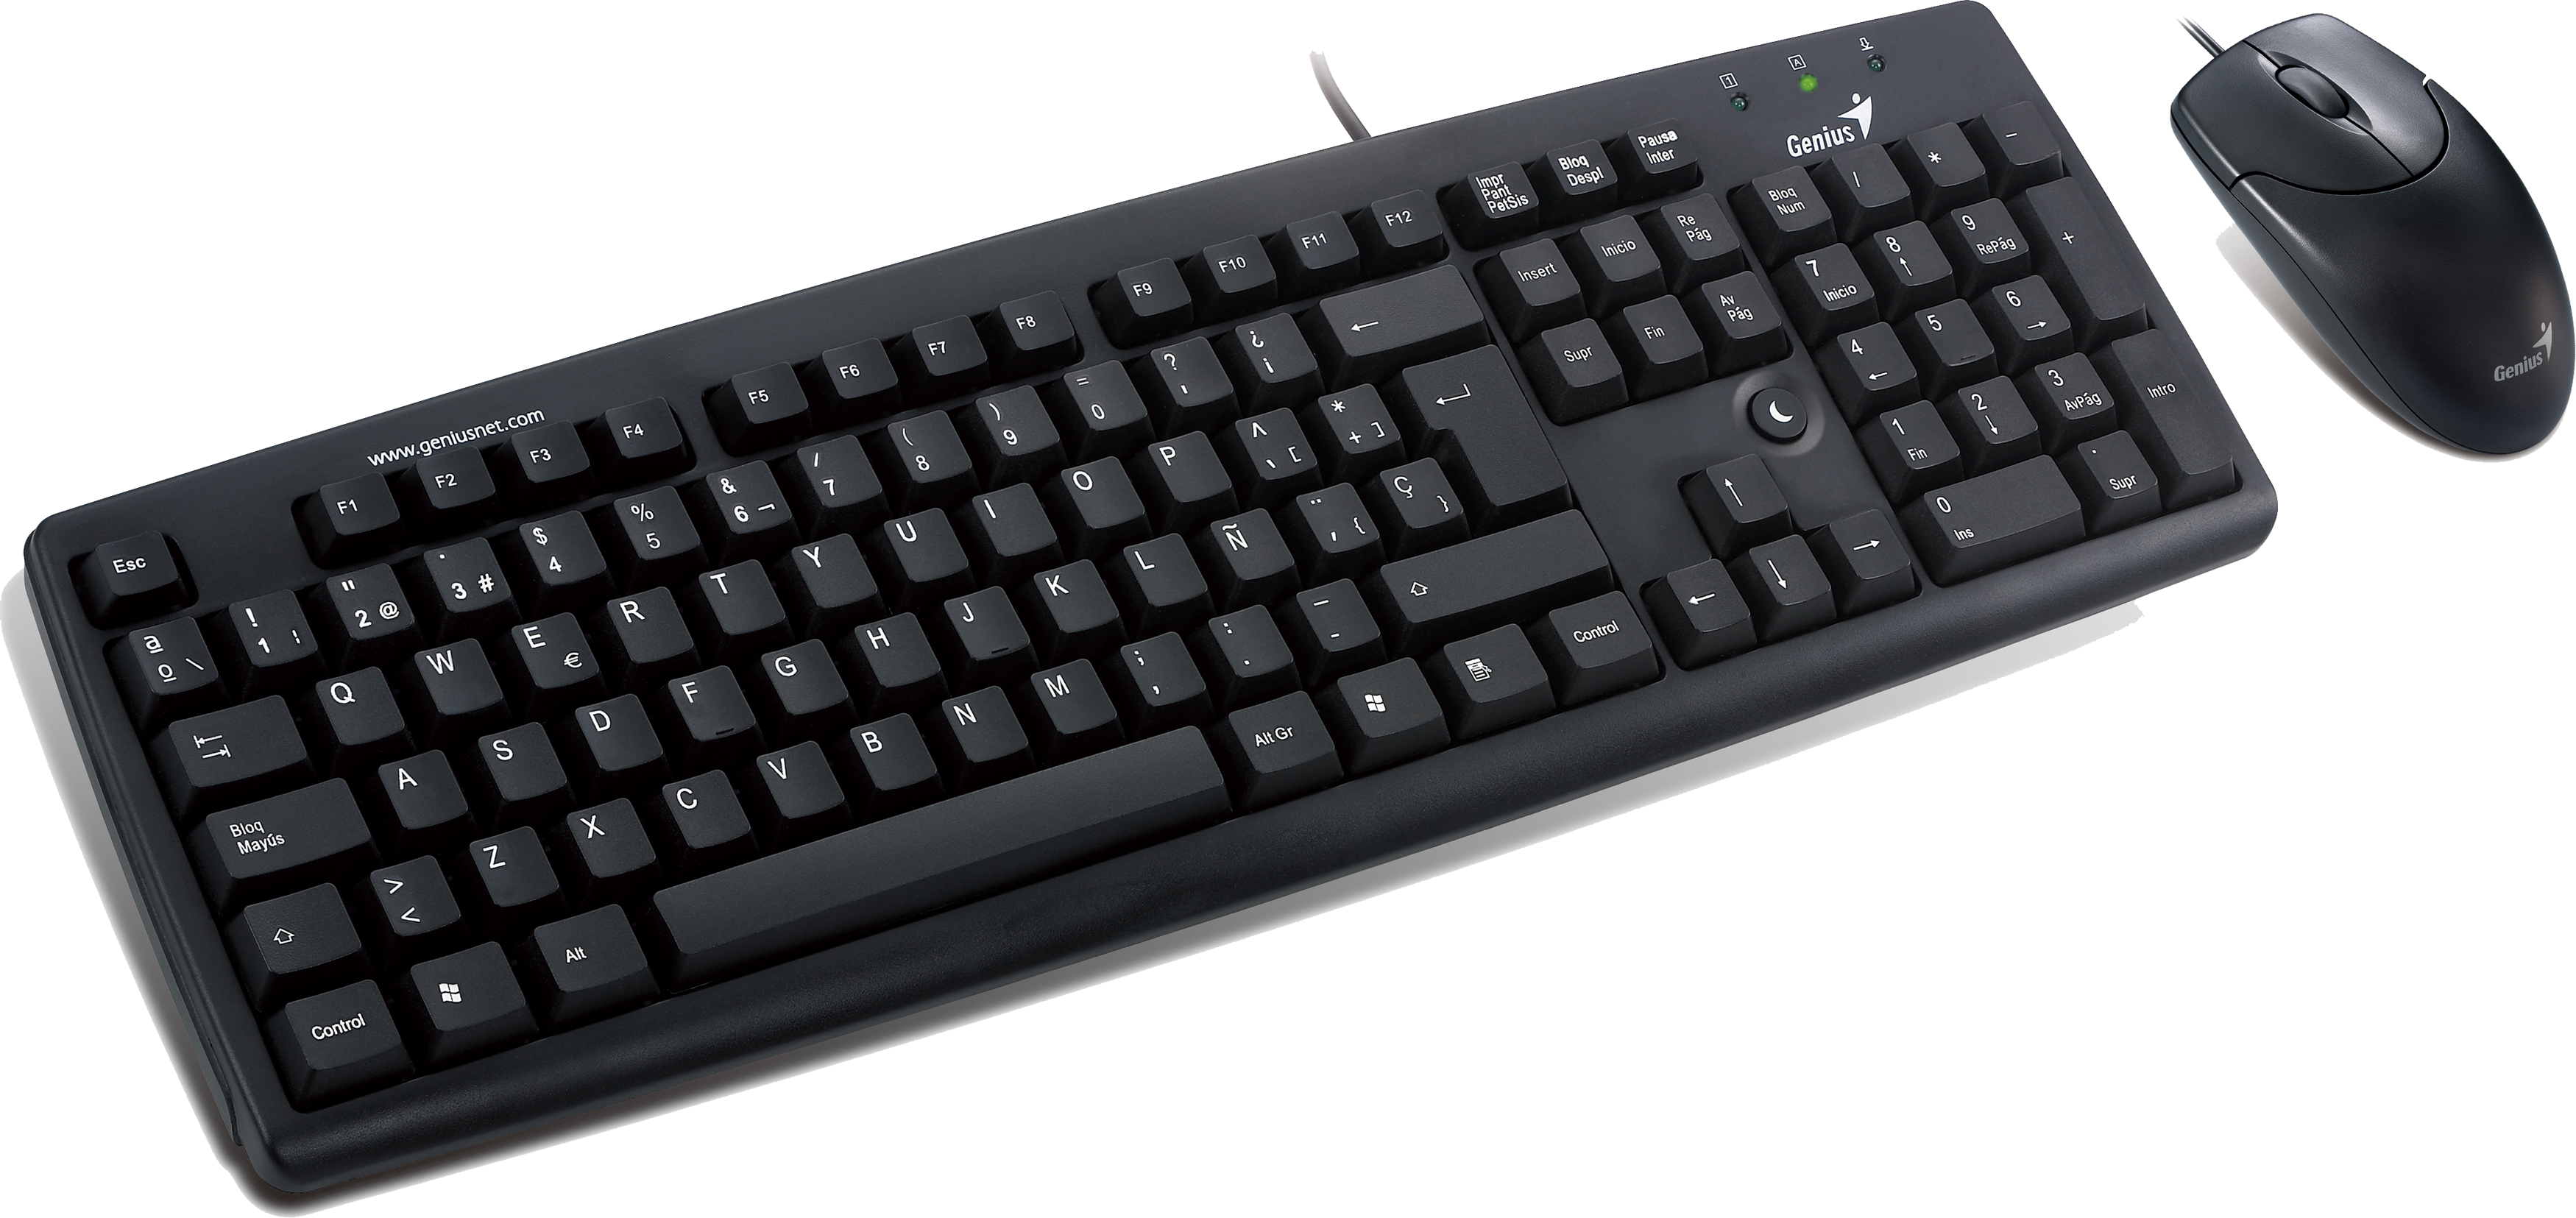 Black computer keyboard PNG image